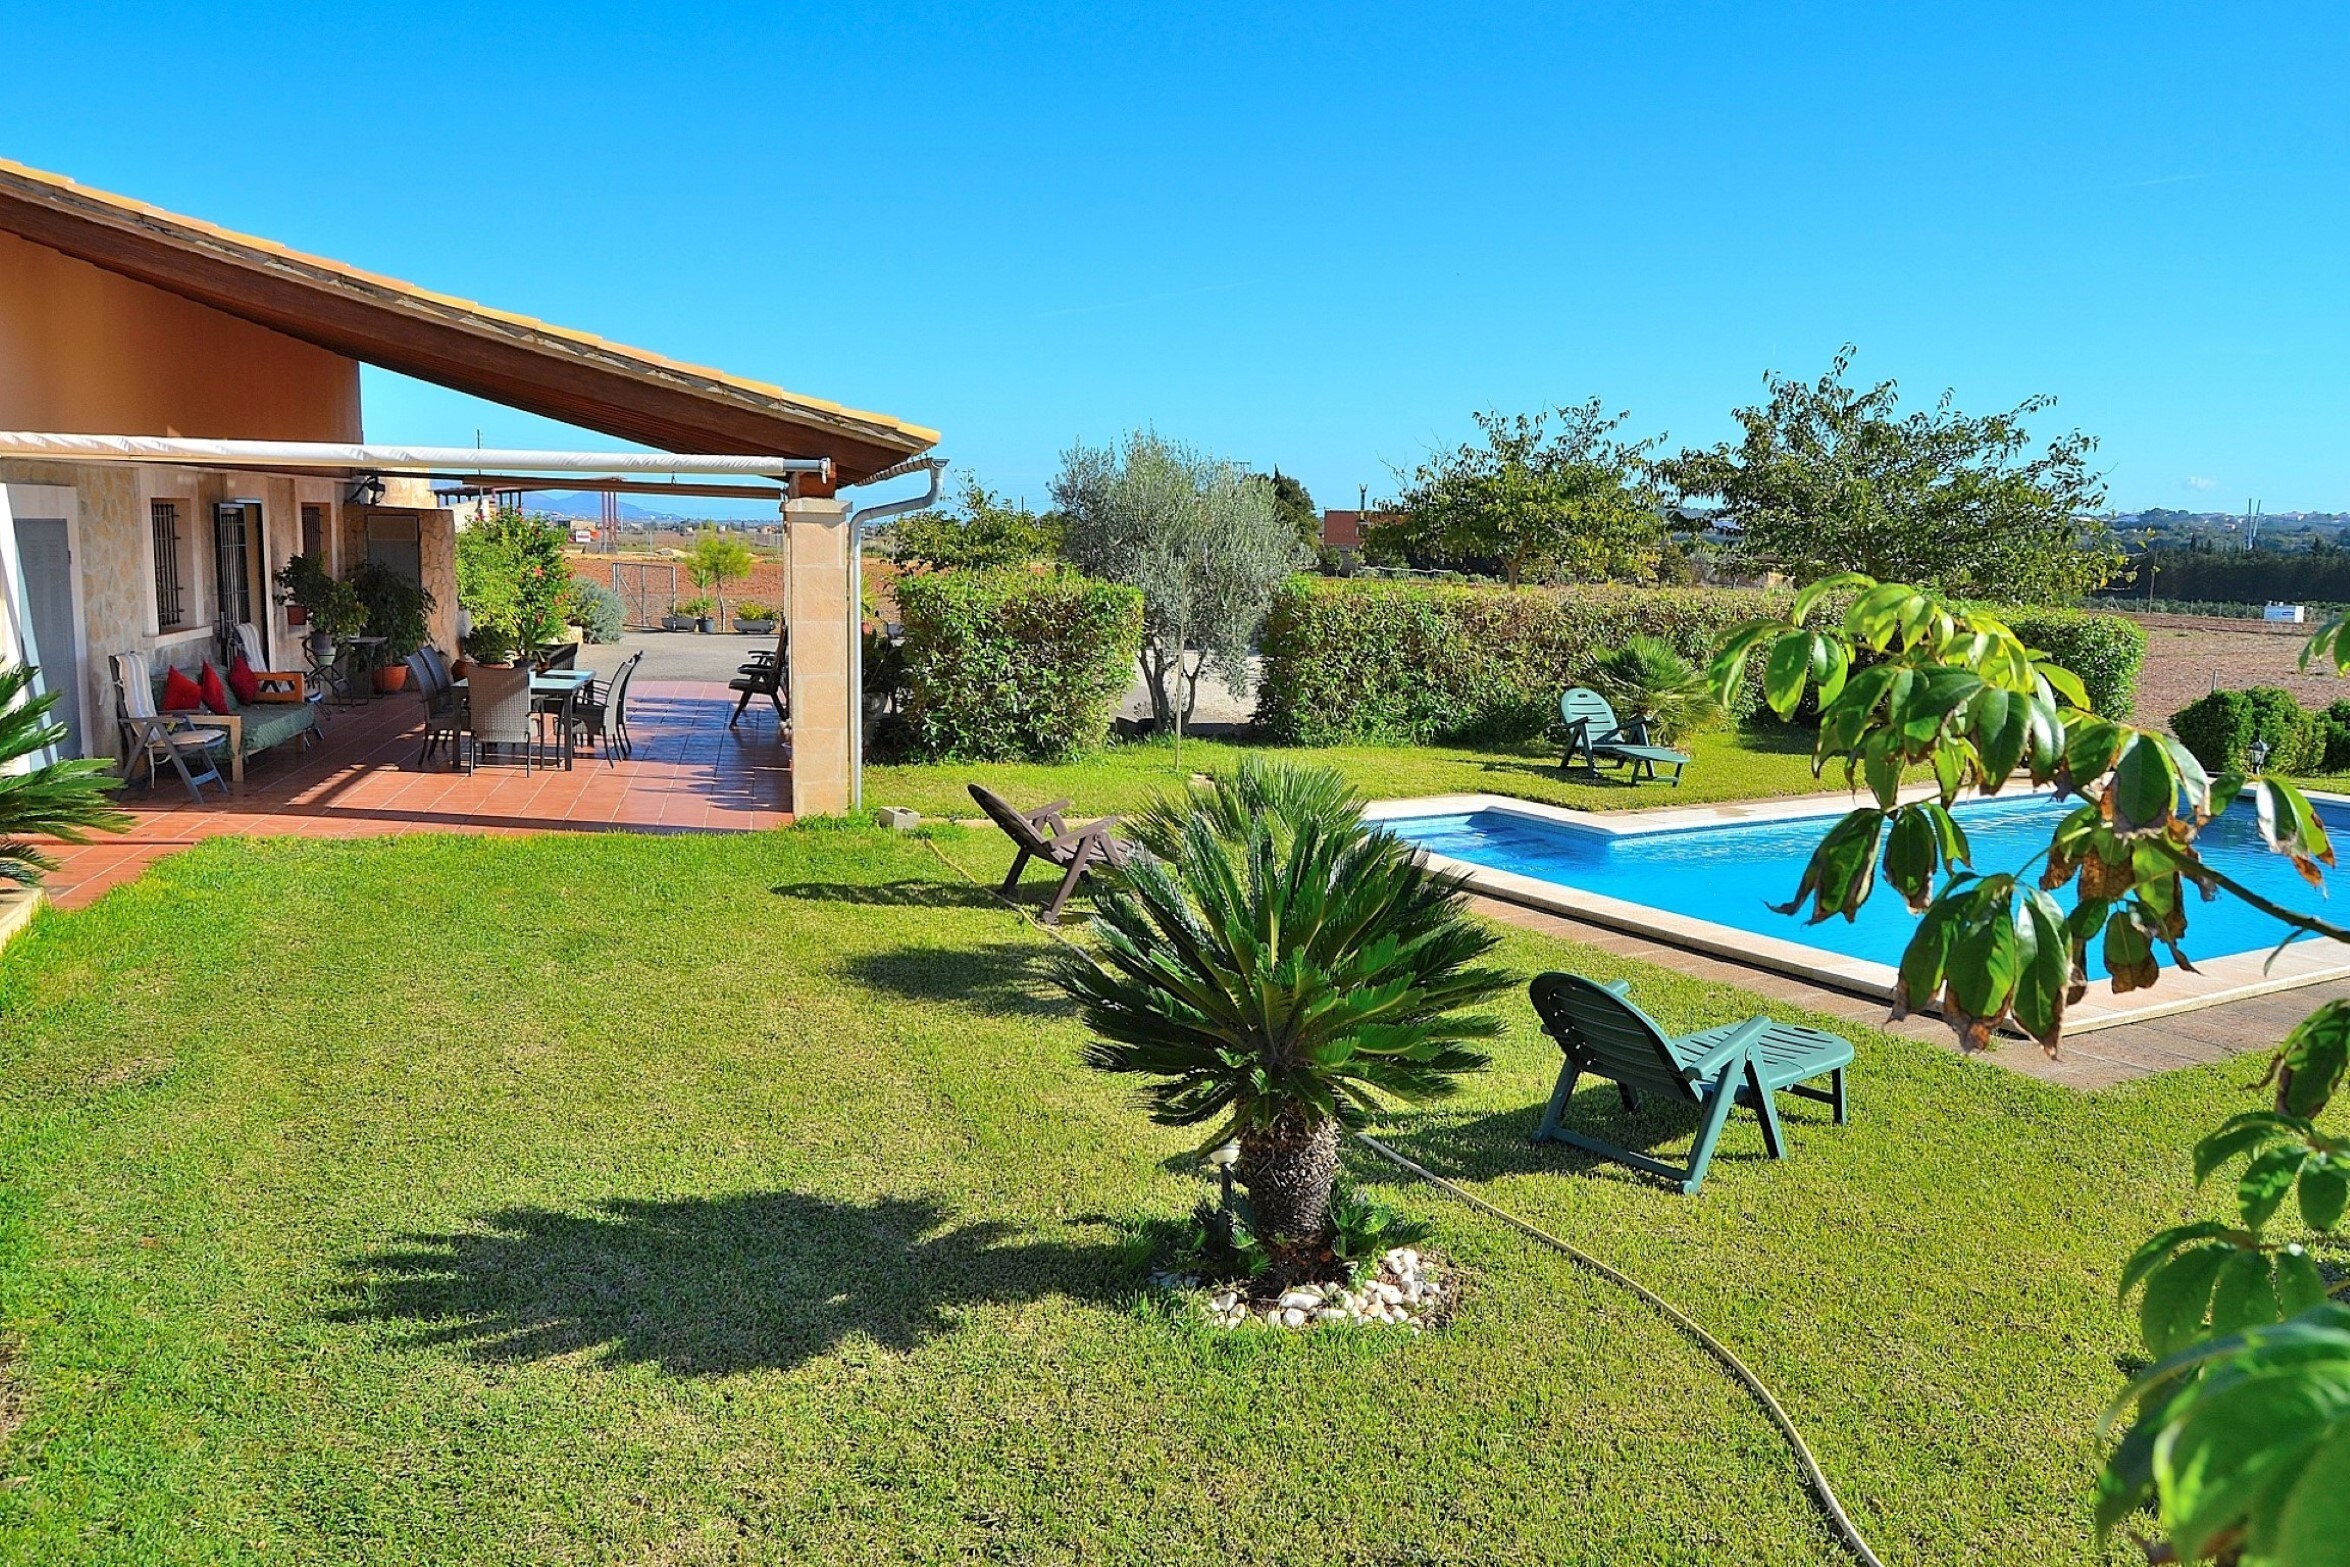 Photo of the beautiful finca with pool in Muro Mallorca